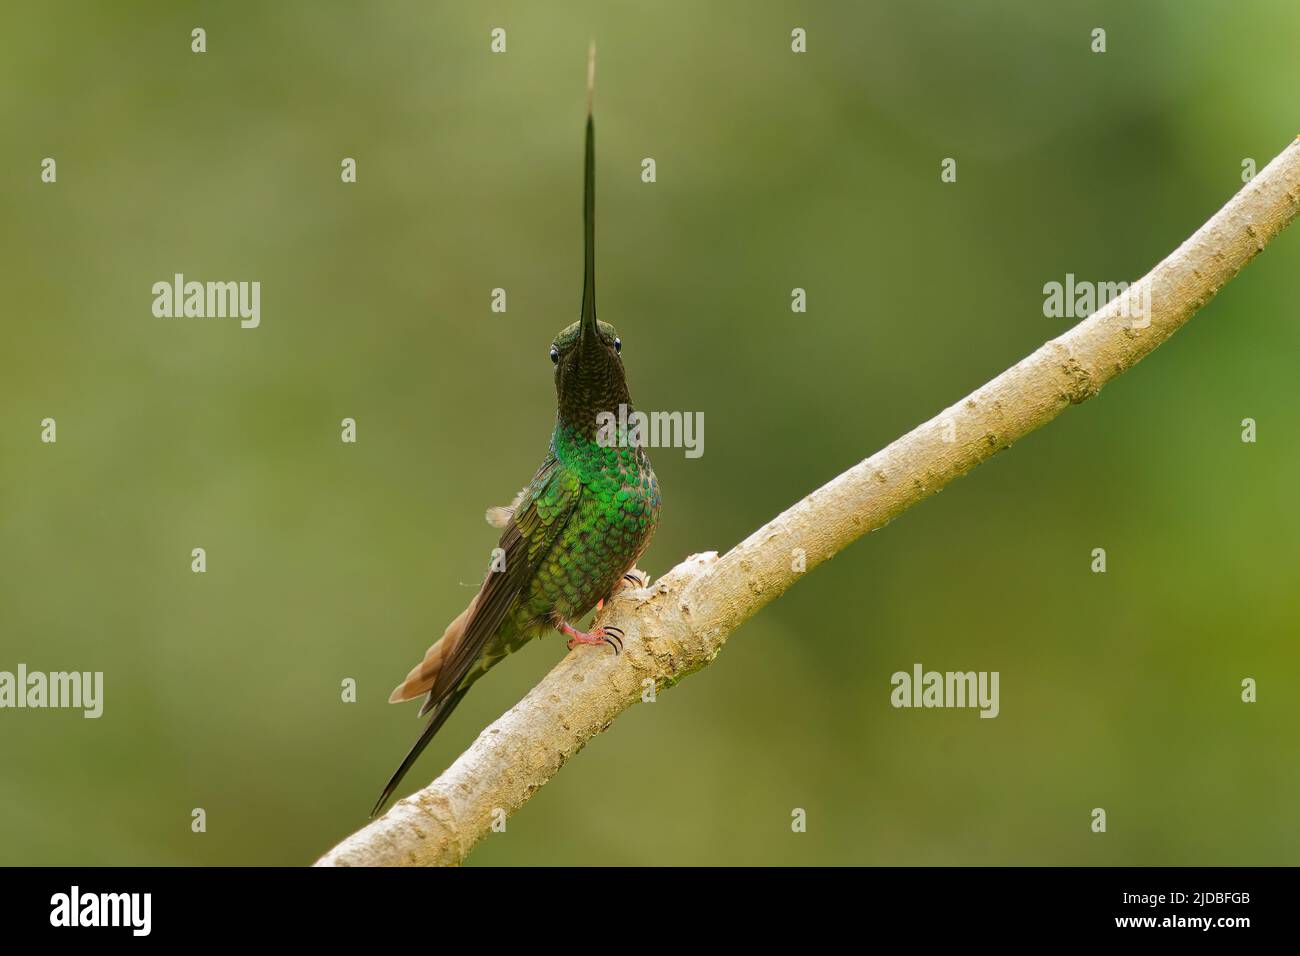 Sword-billed hummingbird - Ensifera ensifera also swordbill, Andean regions of South America, genus Ensifera, unusually long bill to drink nectar from Stock Photo